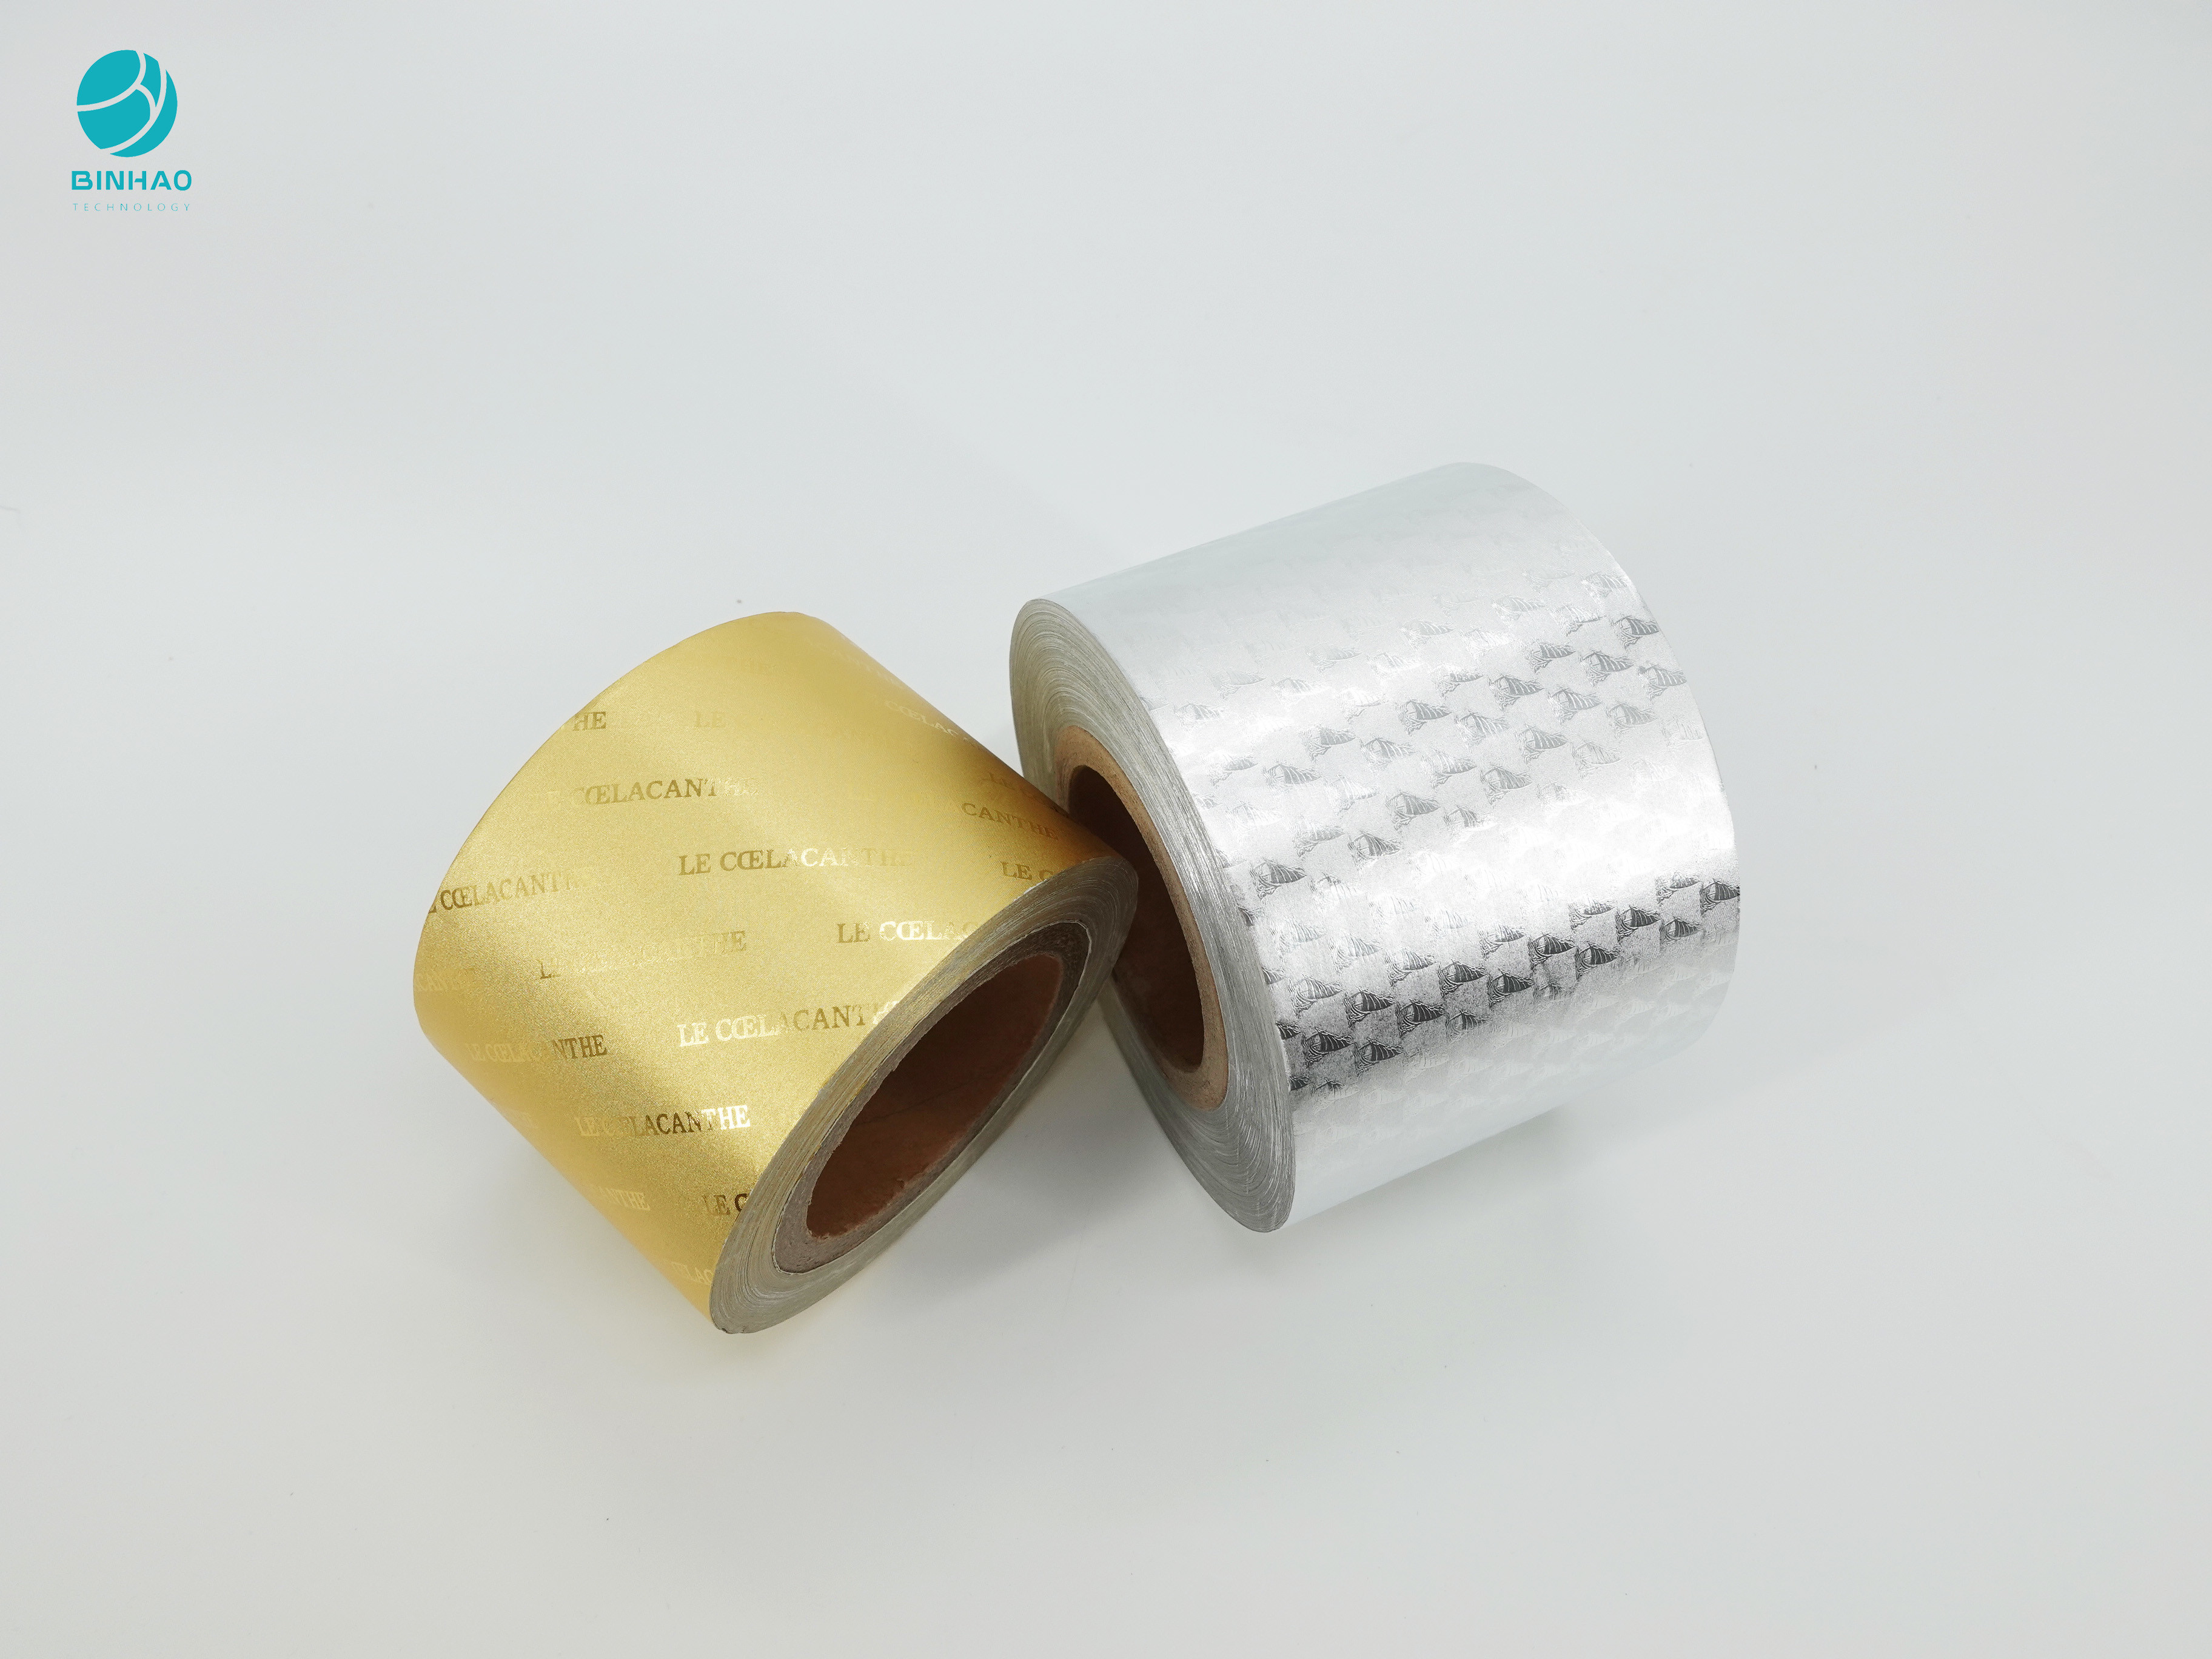 Bright Gold Silver Cigarette Package Aluminium Foil Paper With Custom Design